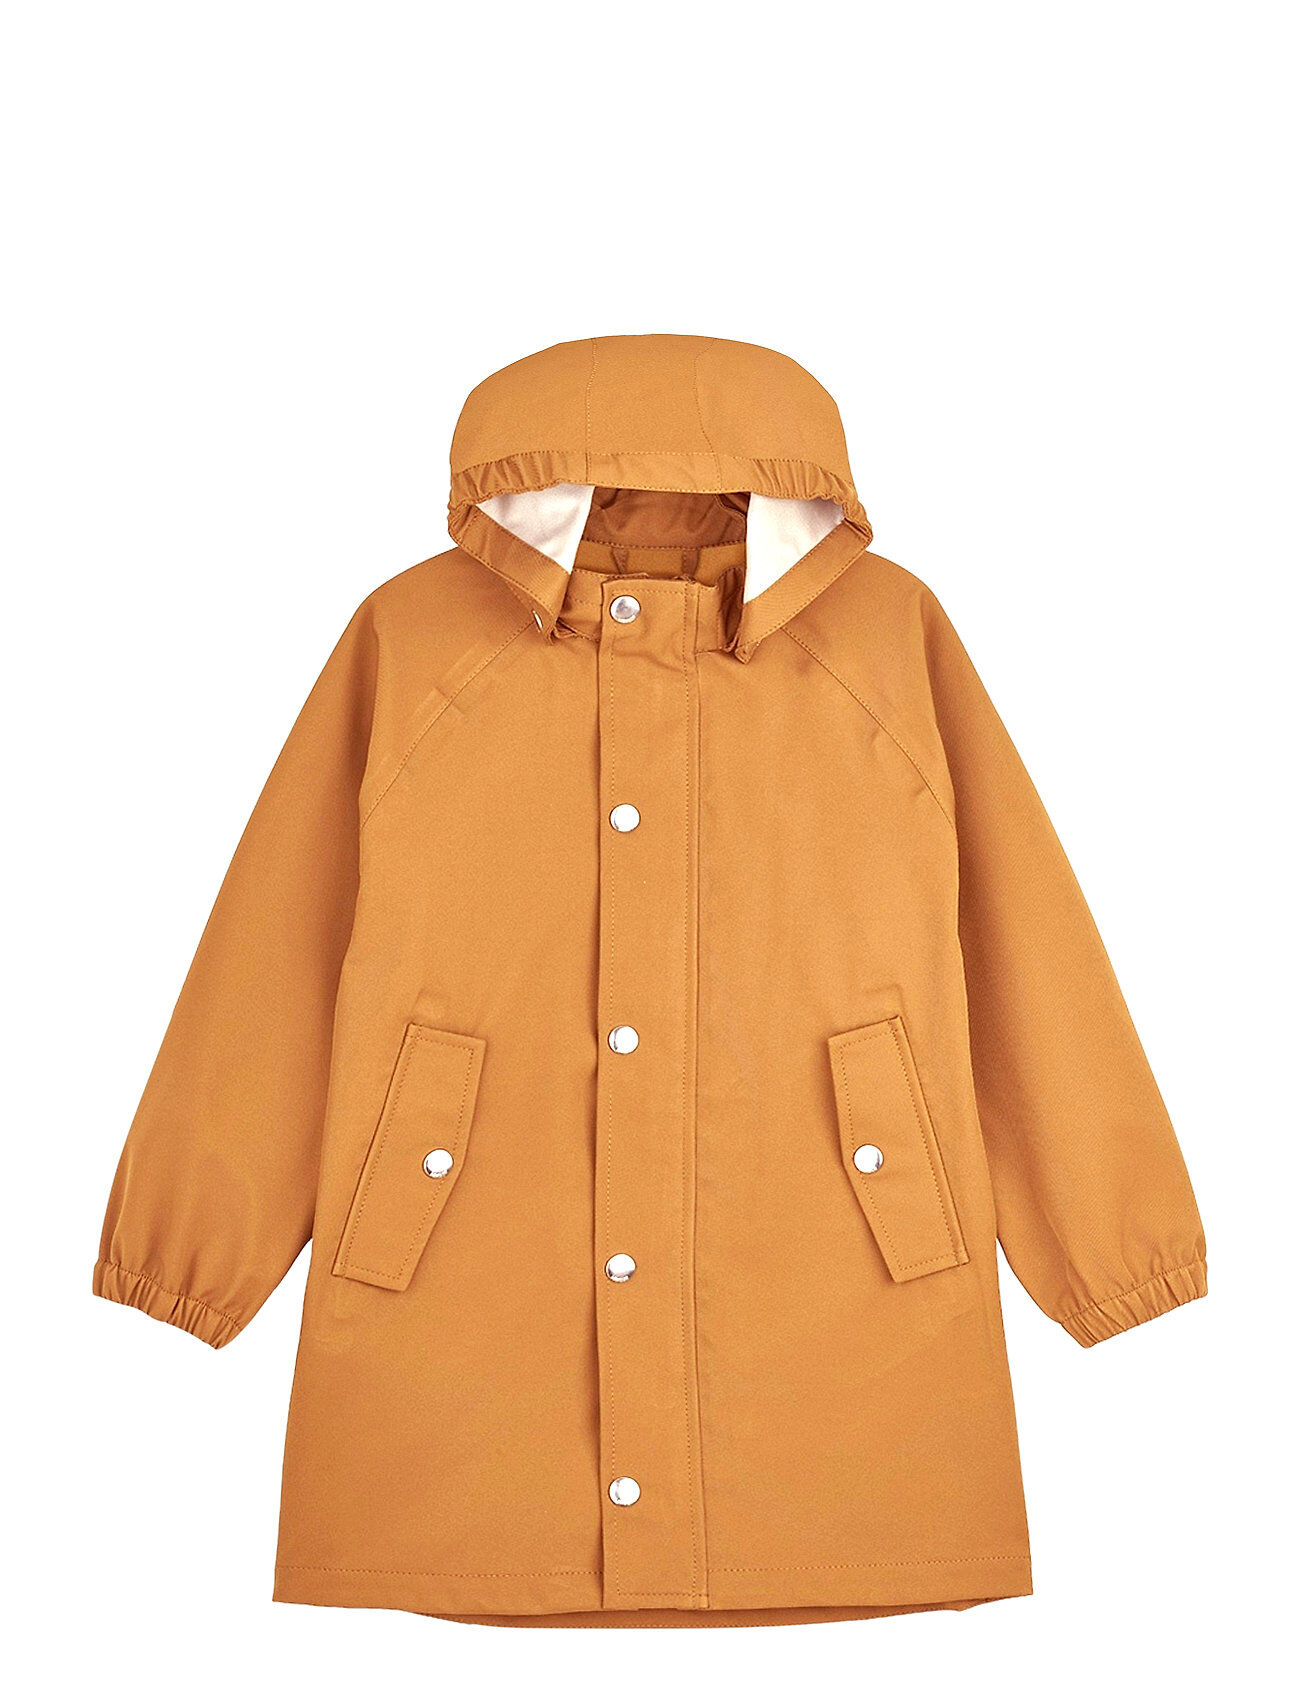 Liewood Spencer Long Raincoat Outerwear Rainwear Jackets Gul Liewood